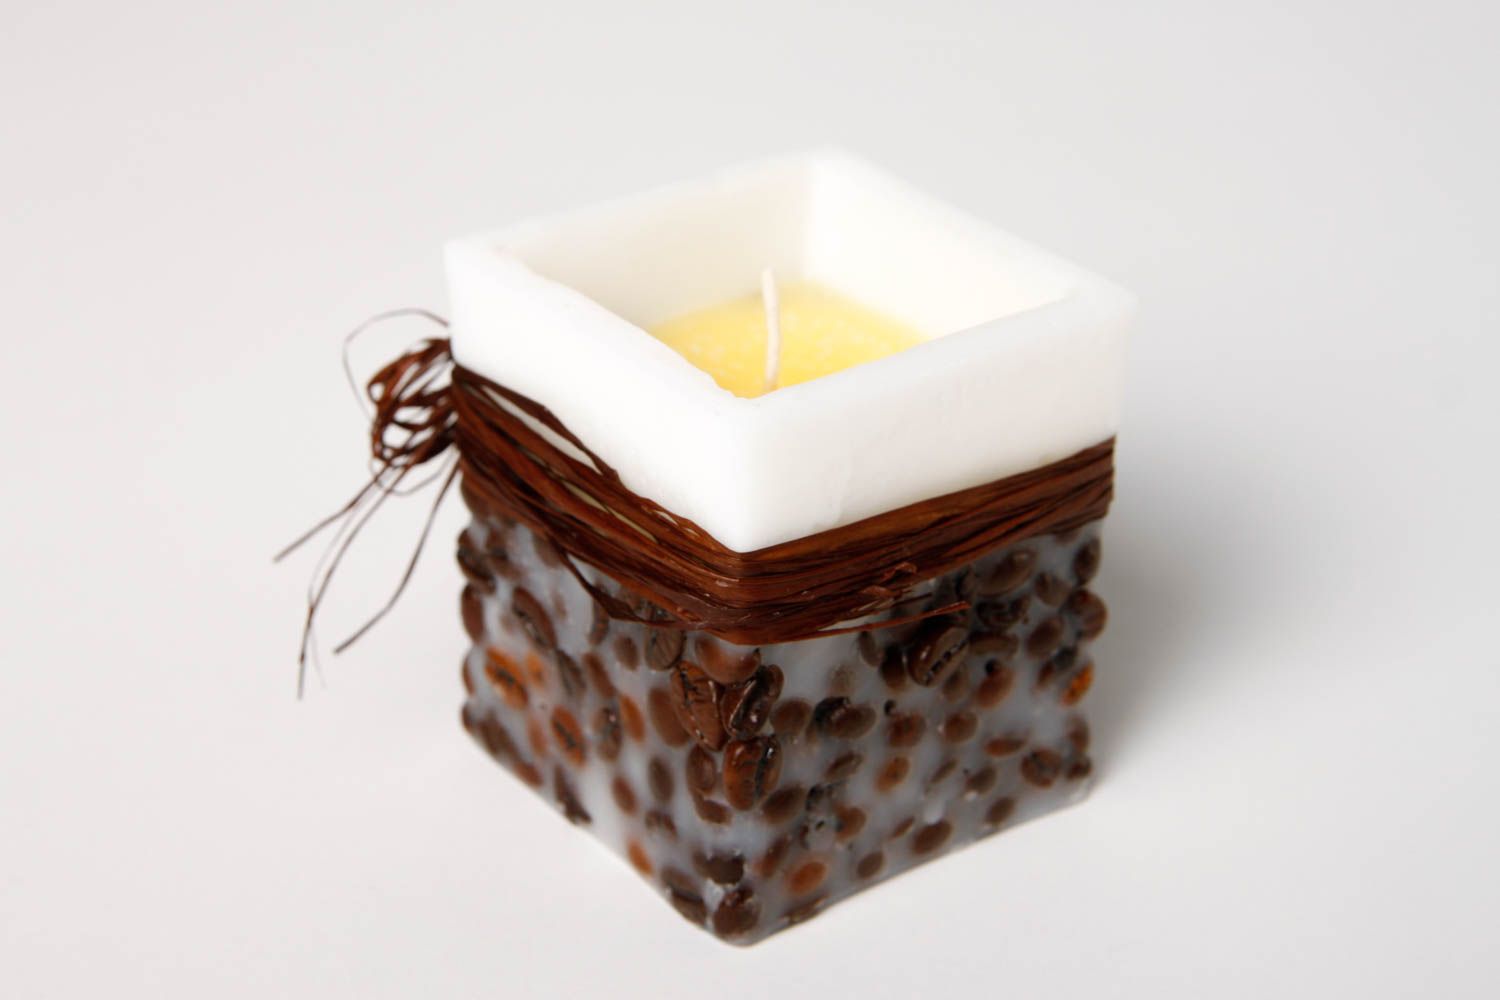 Handmade paraffin candle interior candles aroma candle home decor ideas photo 4